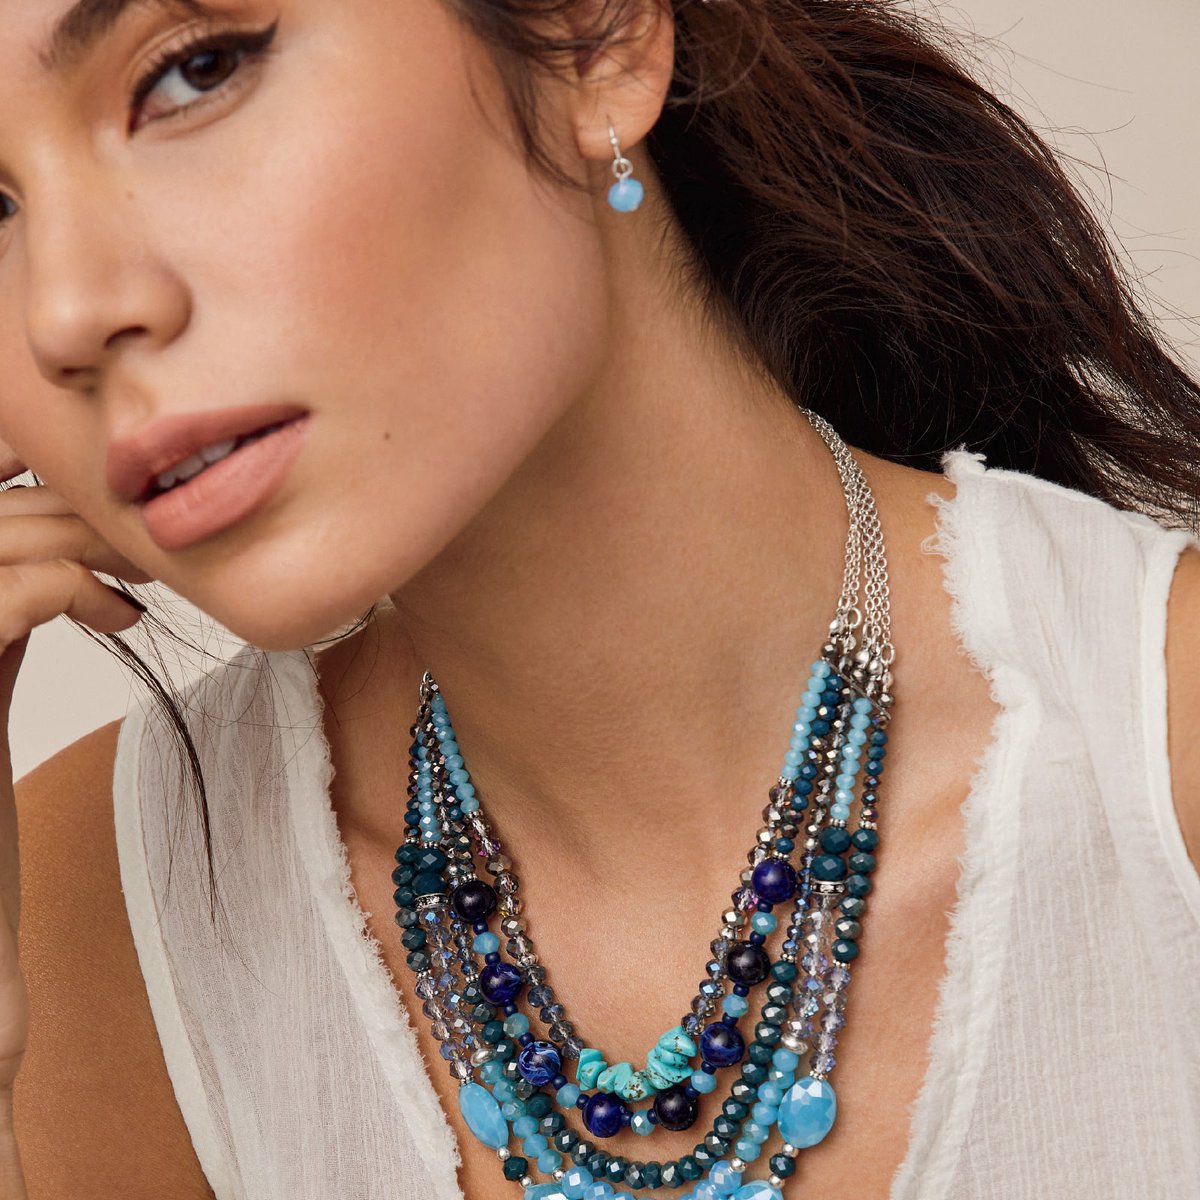 Blue Waves Necklace and Earring Set!

avon.ca/boutique/brigi… 

#avon #blue #bluewaves #earrings #necklace #necklaceandearringset #set #jewelry 
#brigittesbeautycare